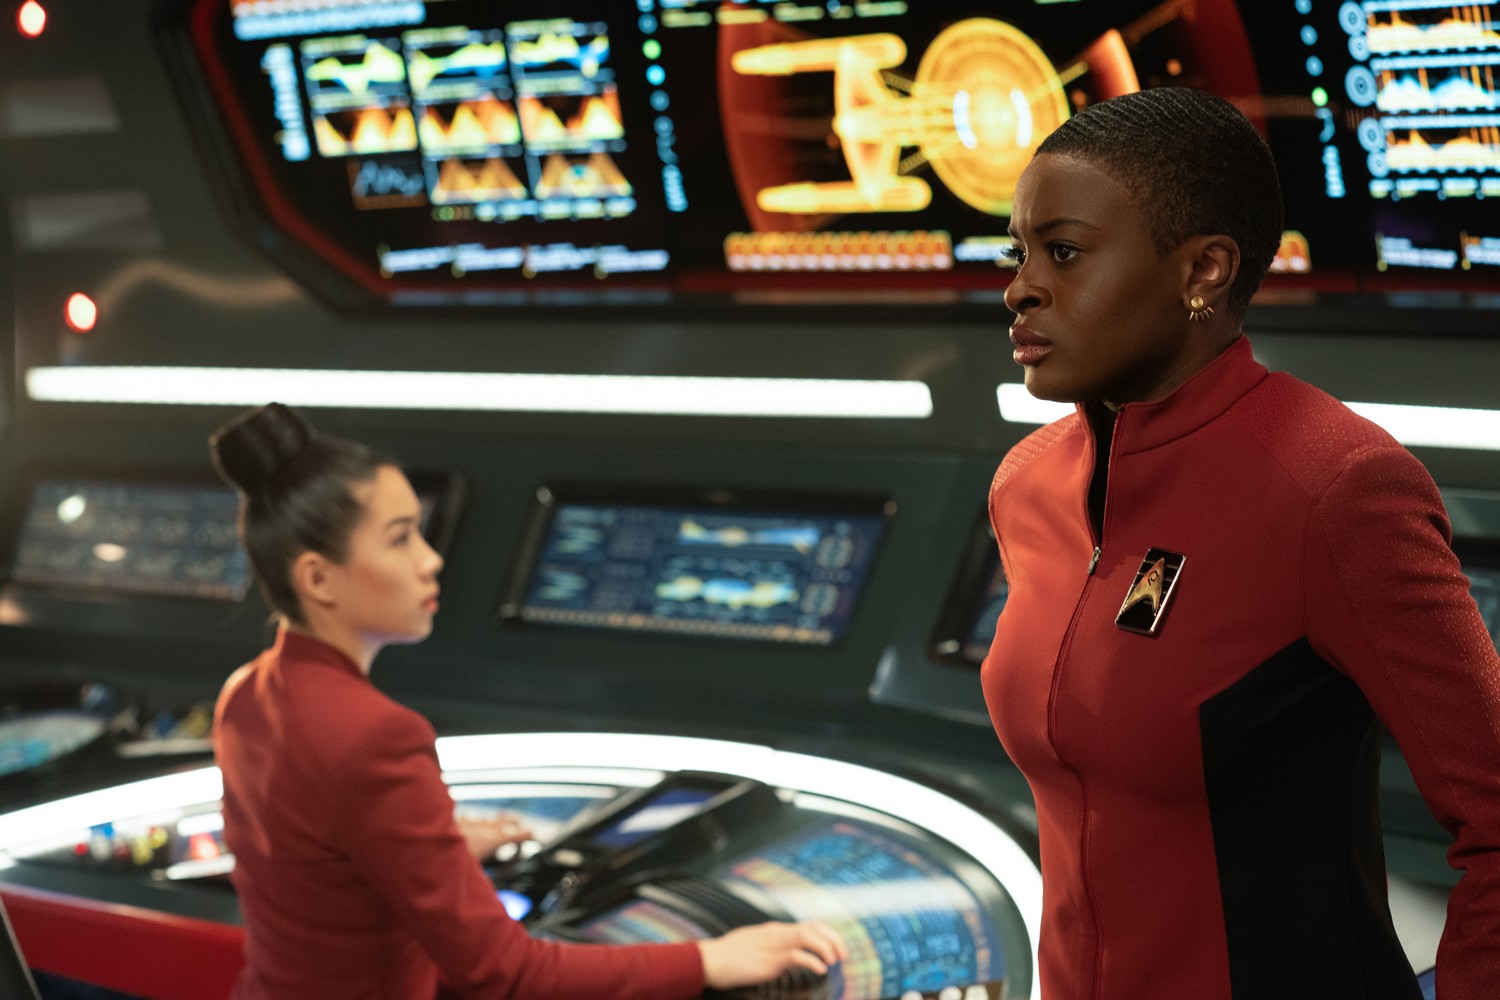 Star Trek: The Strange New Worlds vs. The Orville vs. Discovery fight is  highly illogical.